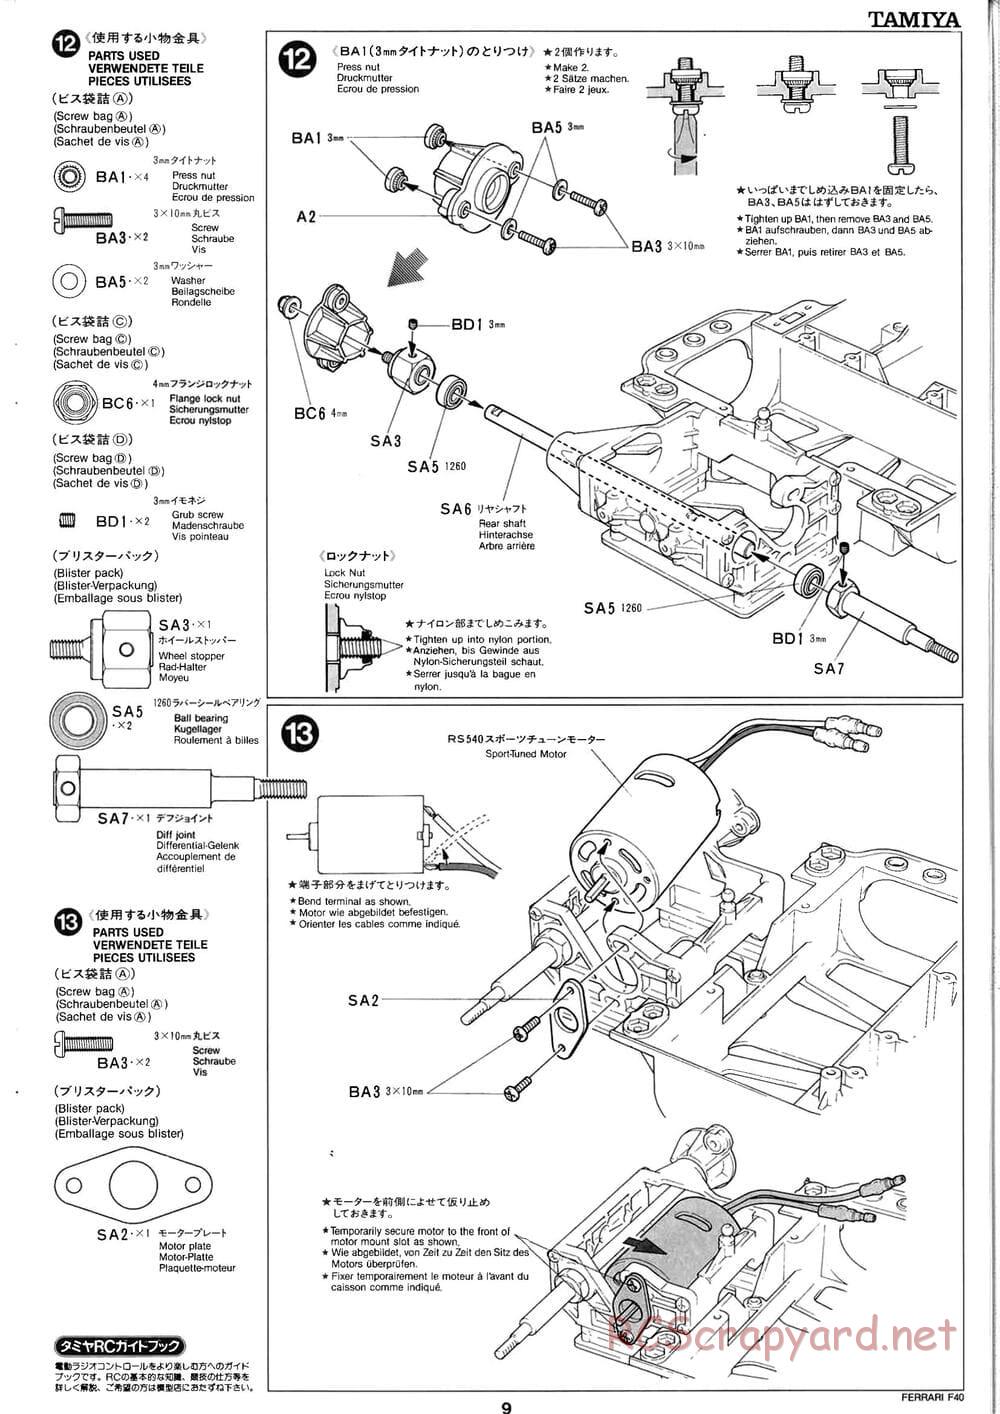 Tamiya - Ferrari F40 - Group-C Chassis - Manual - Page 9